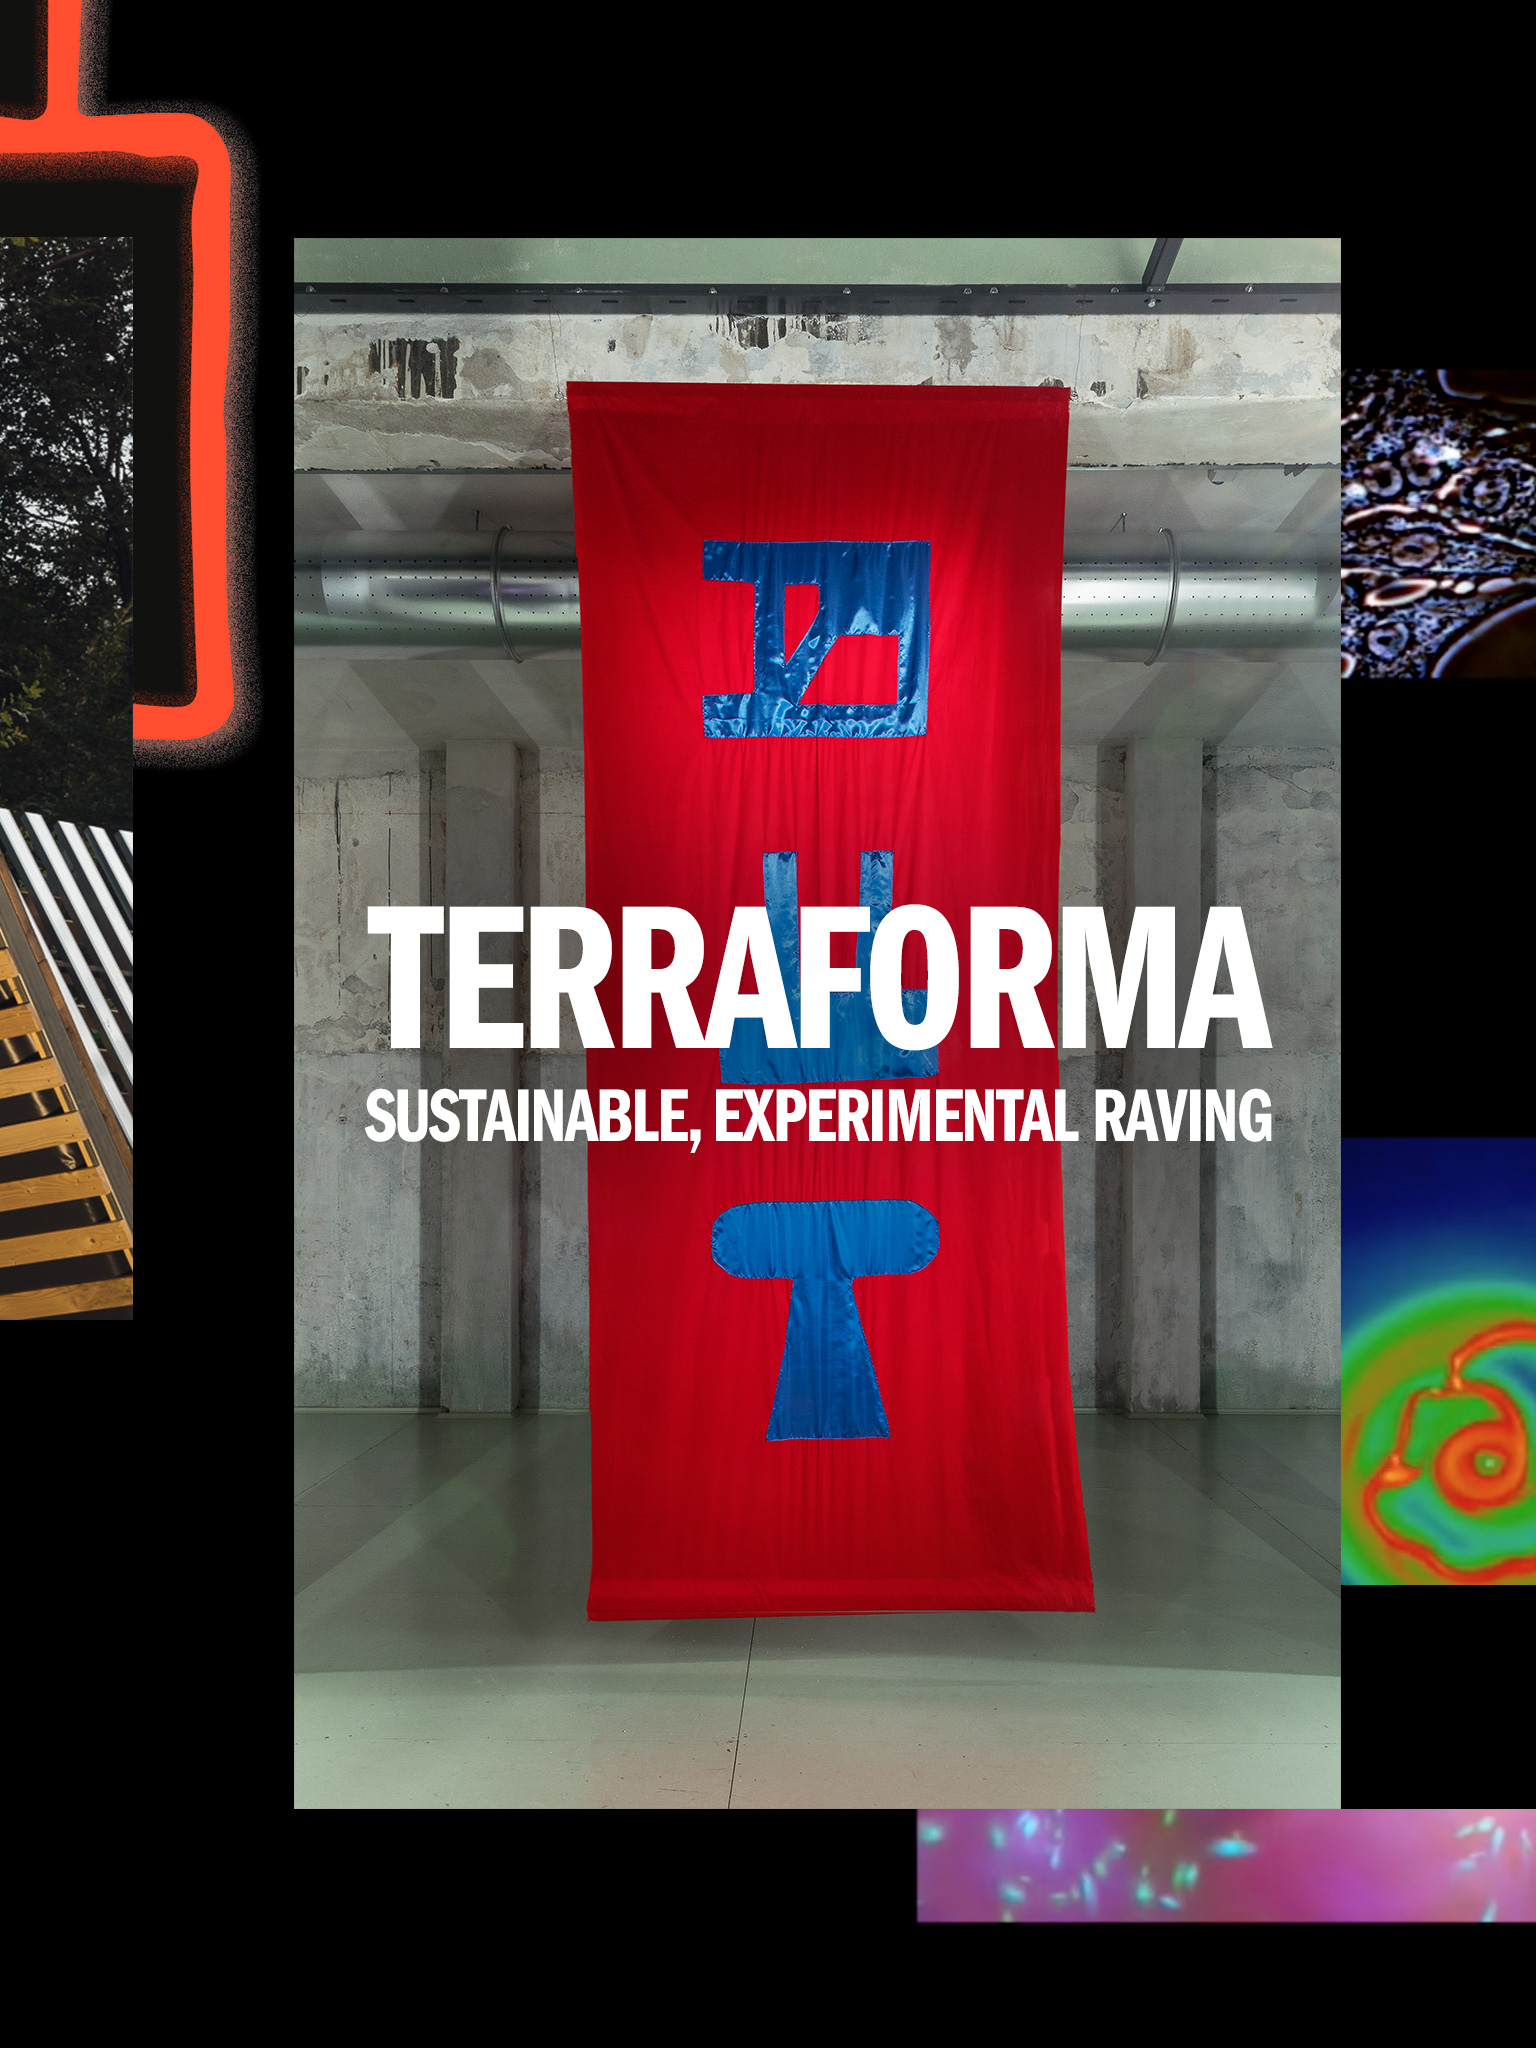 Terraforma festival: Sustainable, experimental raving